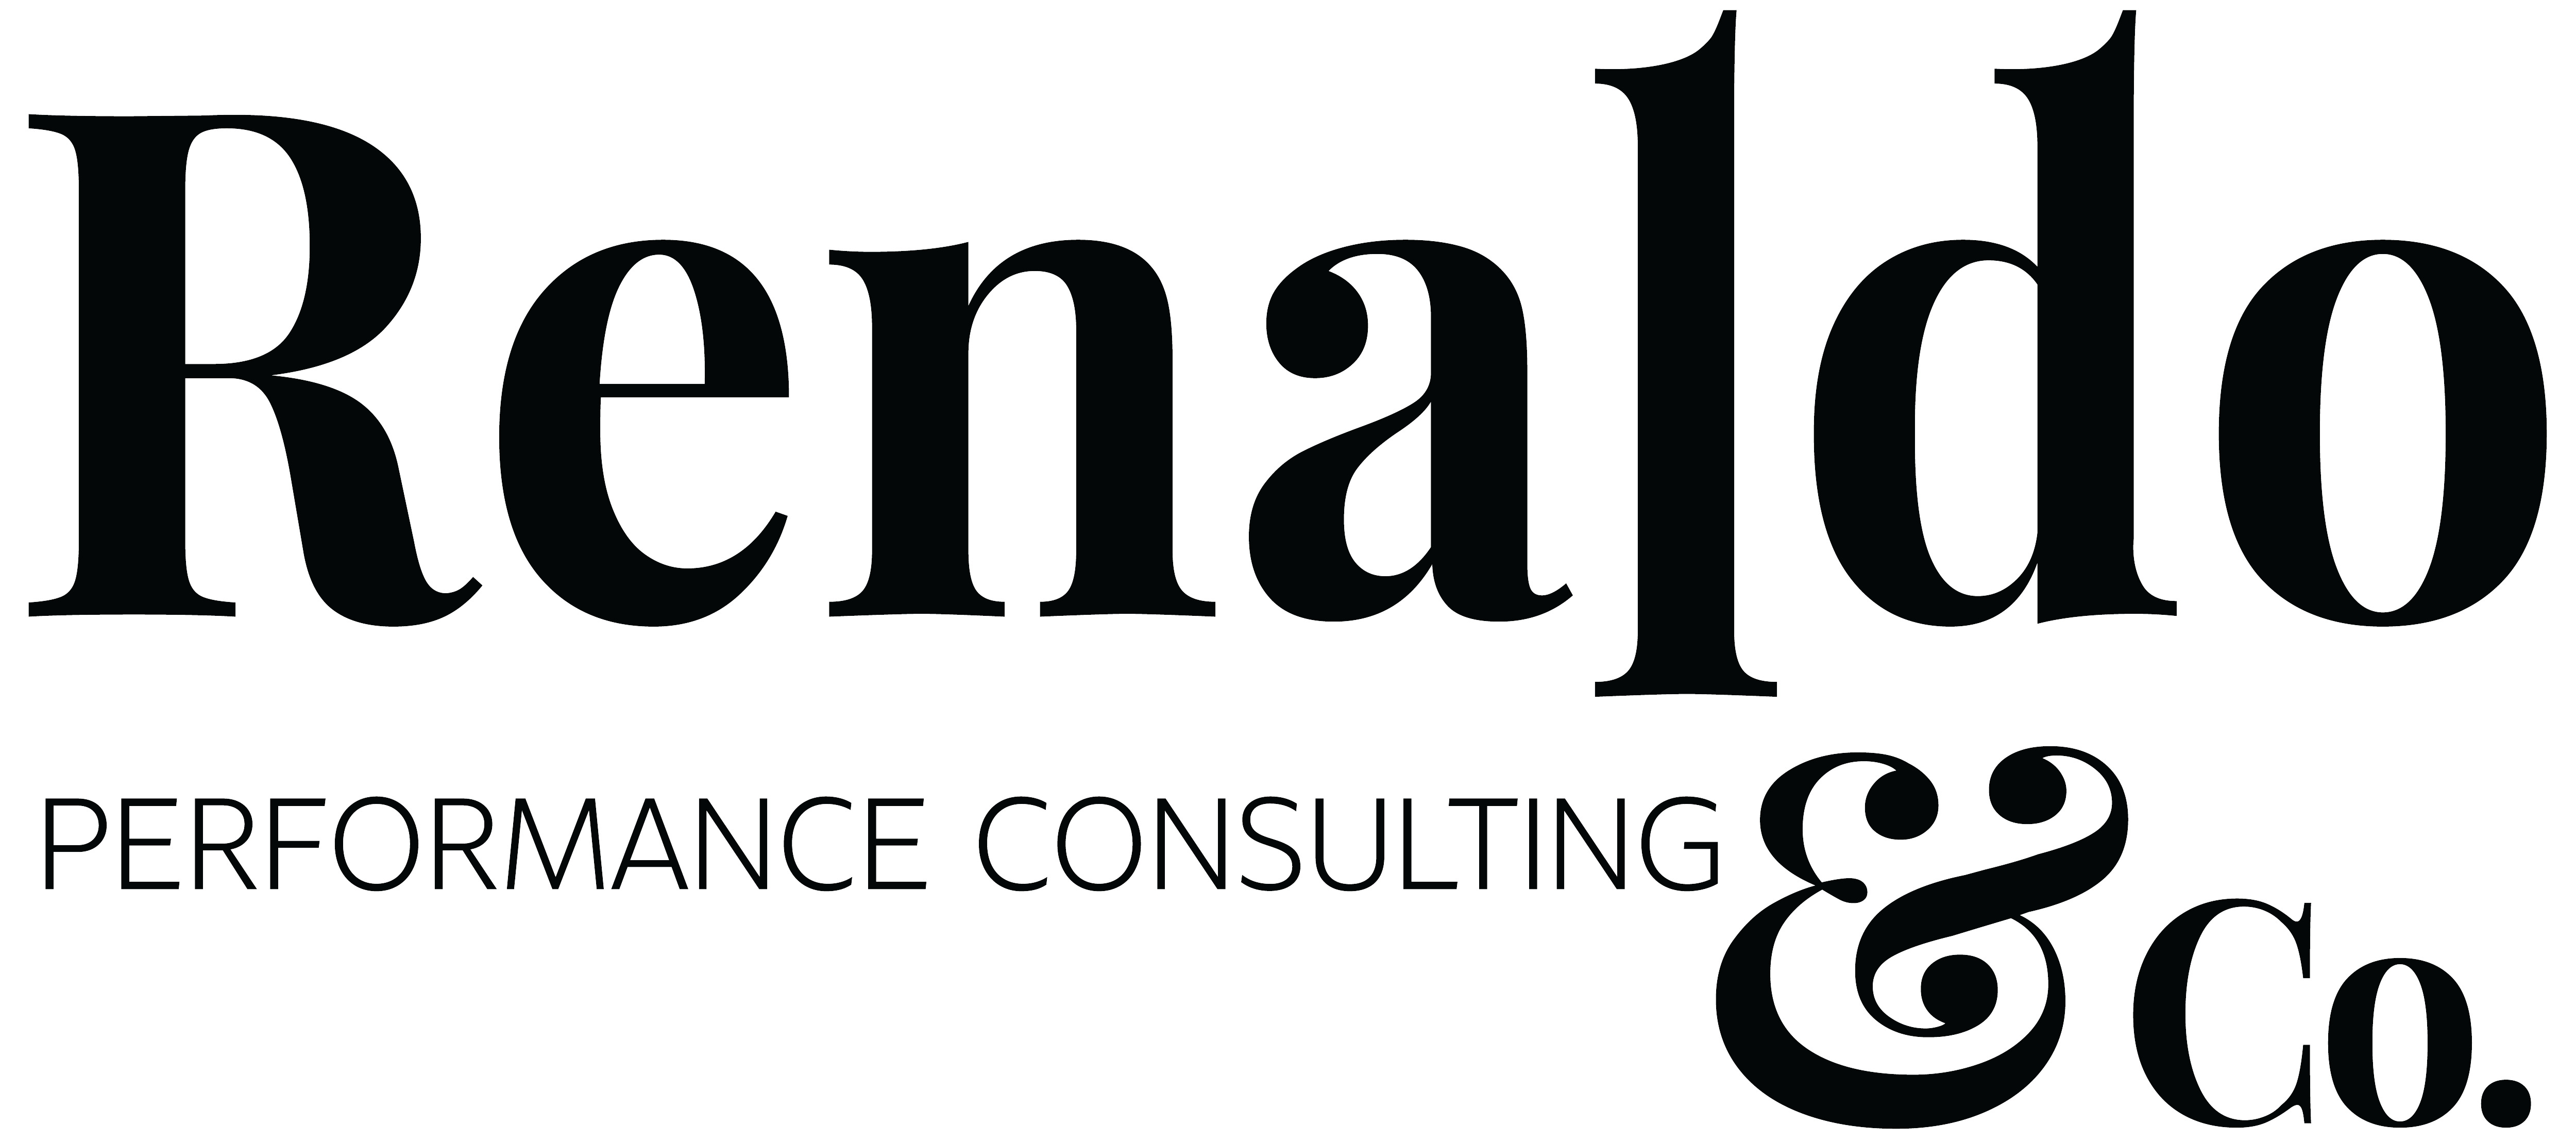 Renaldo & Co. Performance Consulting